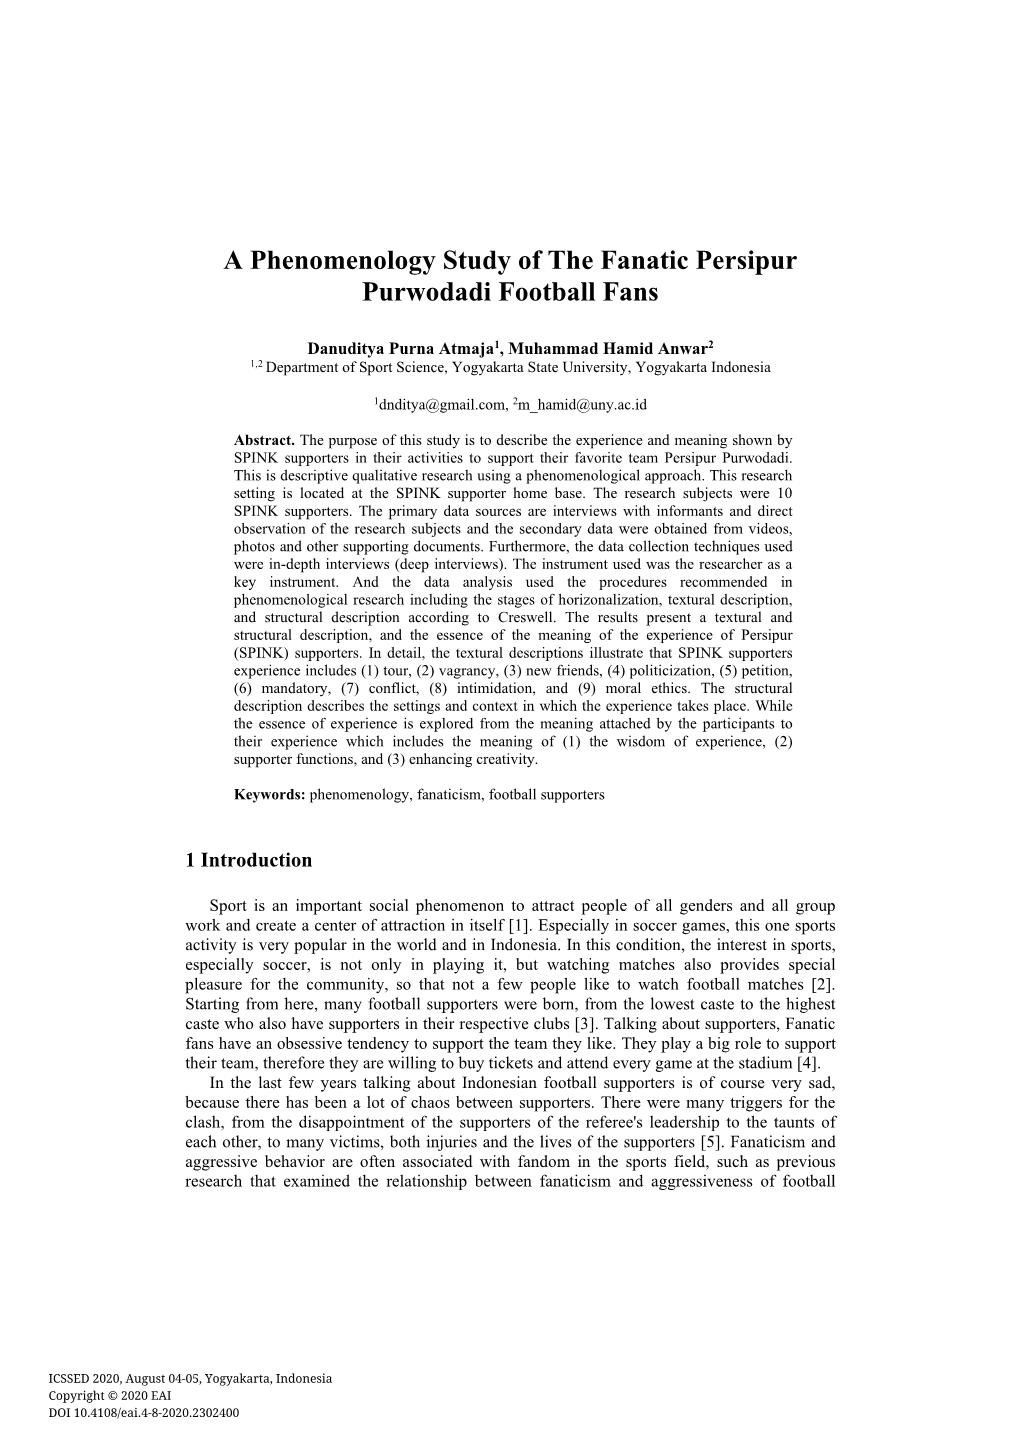 A Phenomenology Study of the Fanatic Persipur Purwodadi Football Fans